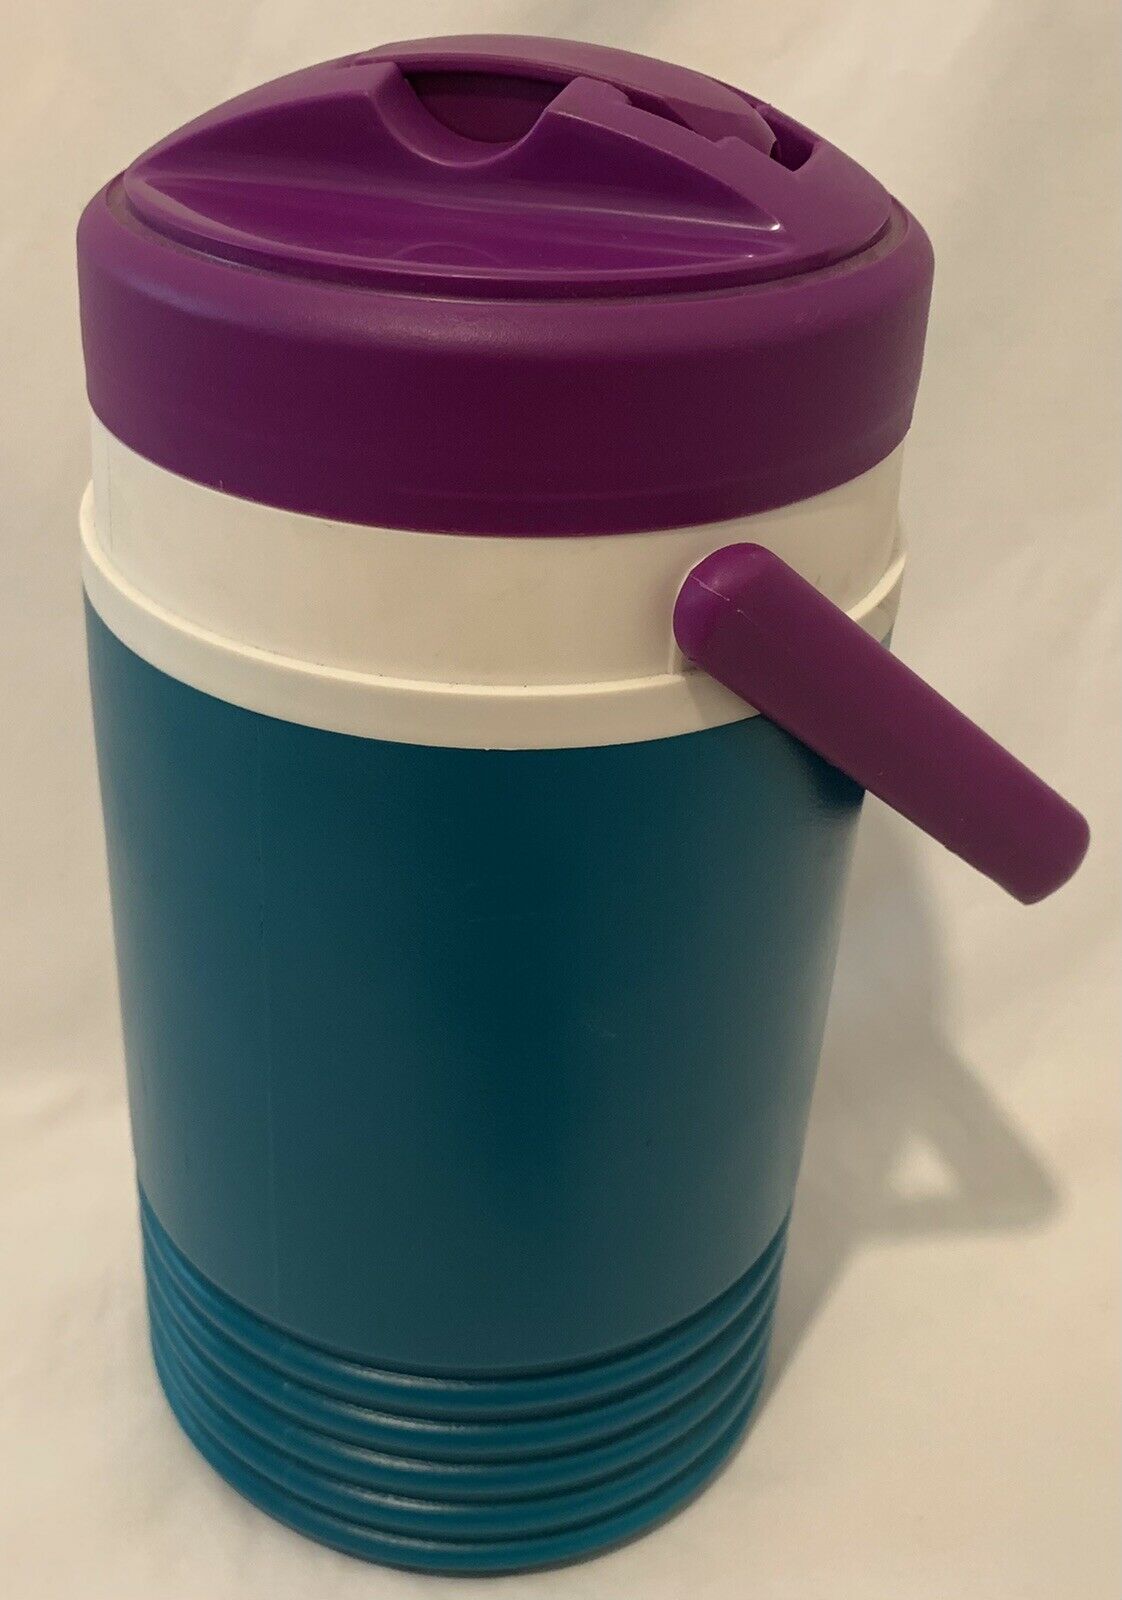 Vintage Igloo 1/2 Half Gallon Water Jug Cooler - Green Purple White - Spout